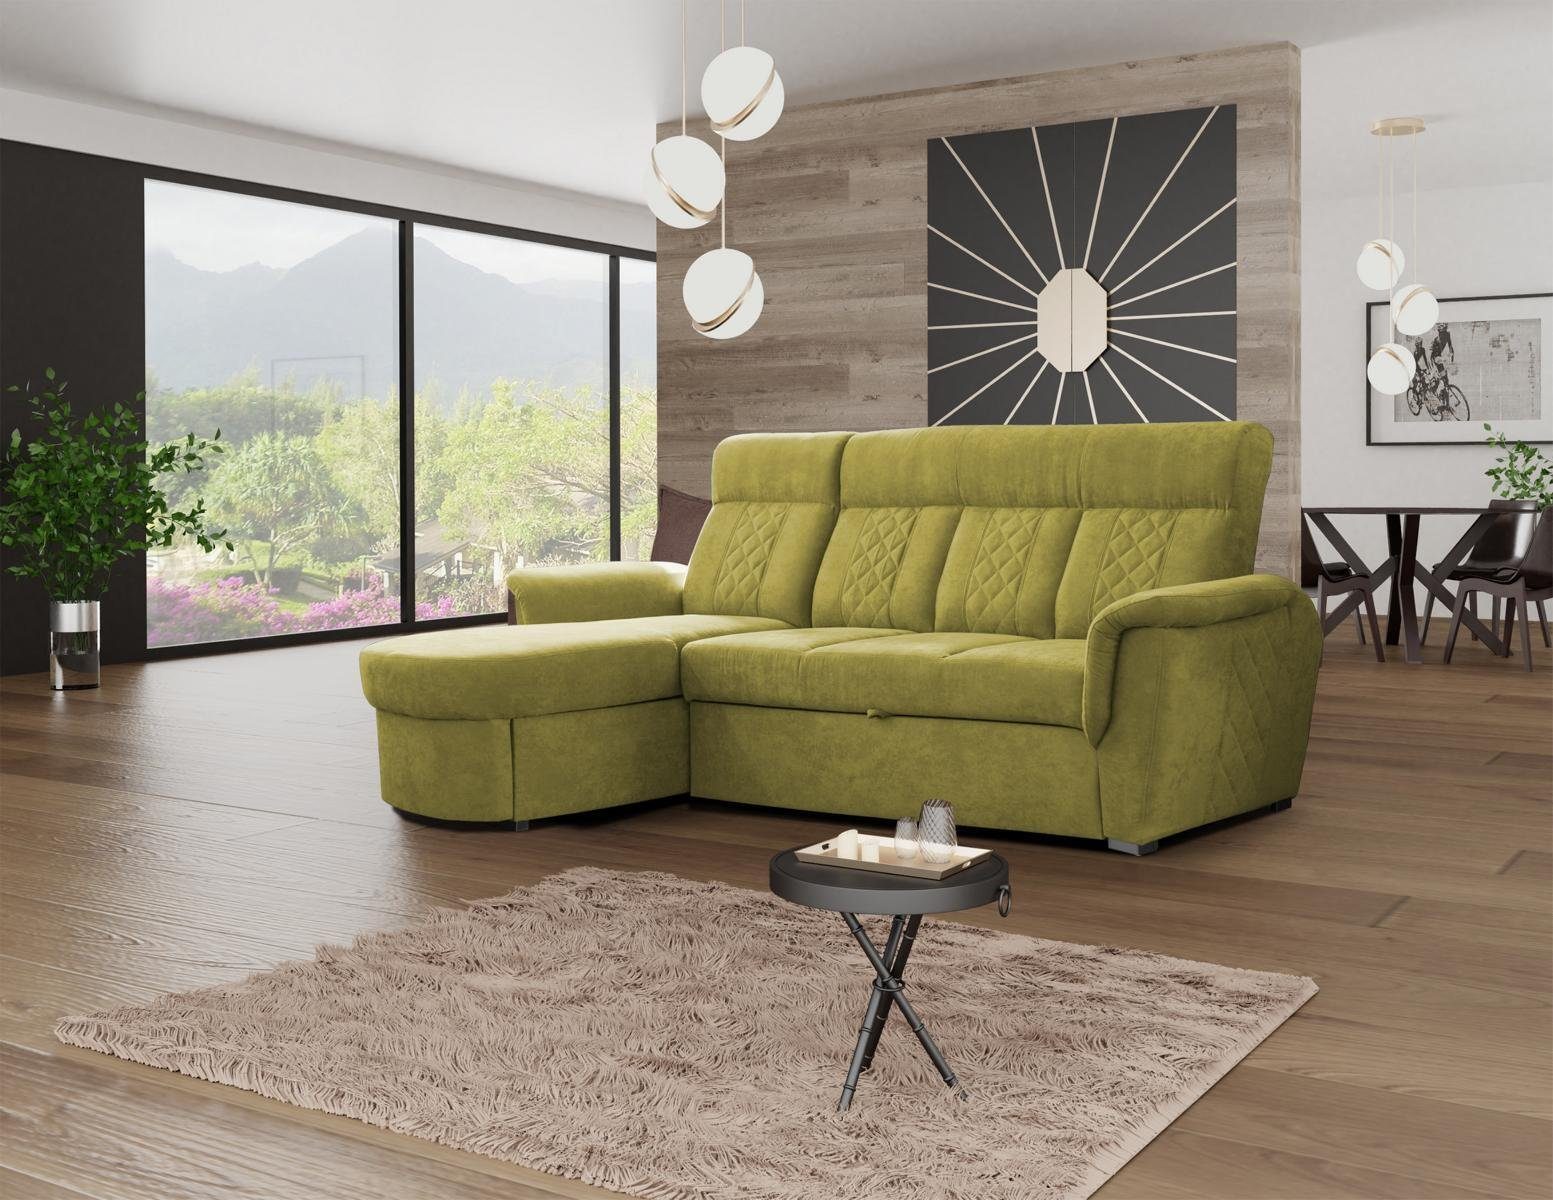 JVmoebel Ecksofa Ecksofa Sofas Design Sofas Mit exklusive moderne hochwertige Bettfunktion Grün L-Form